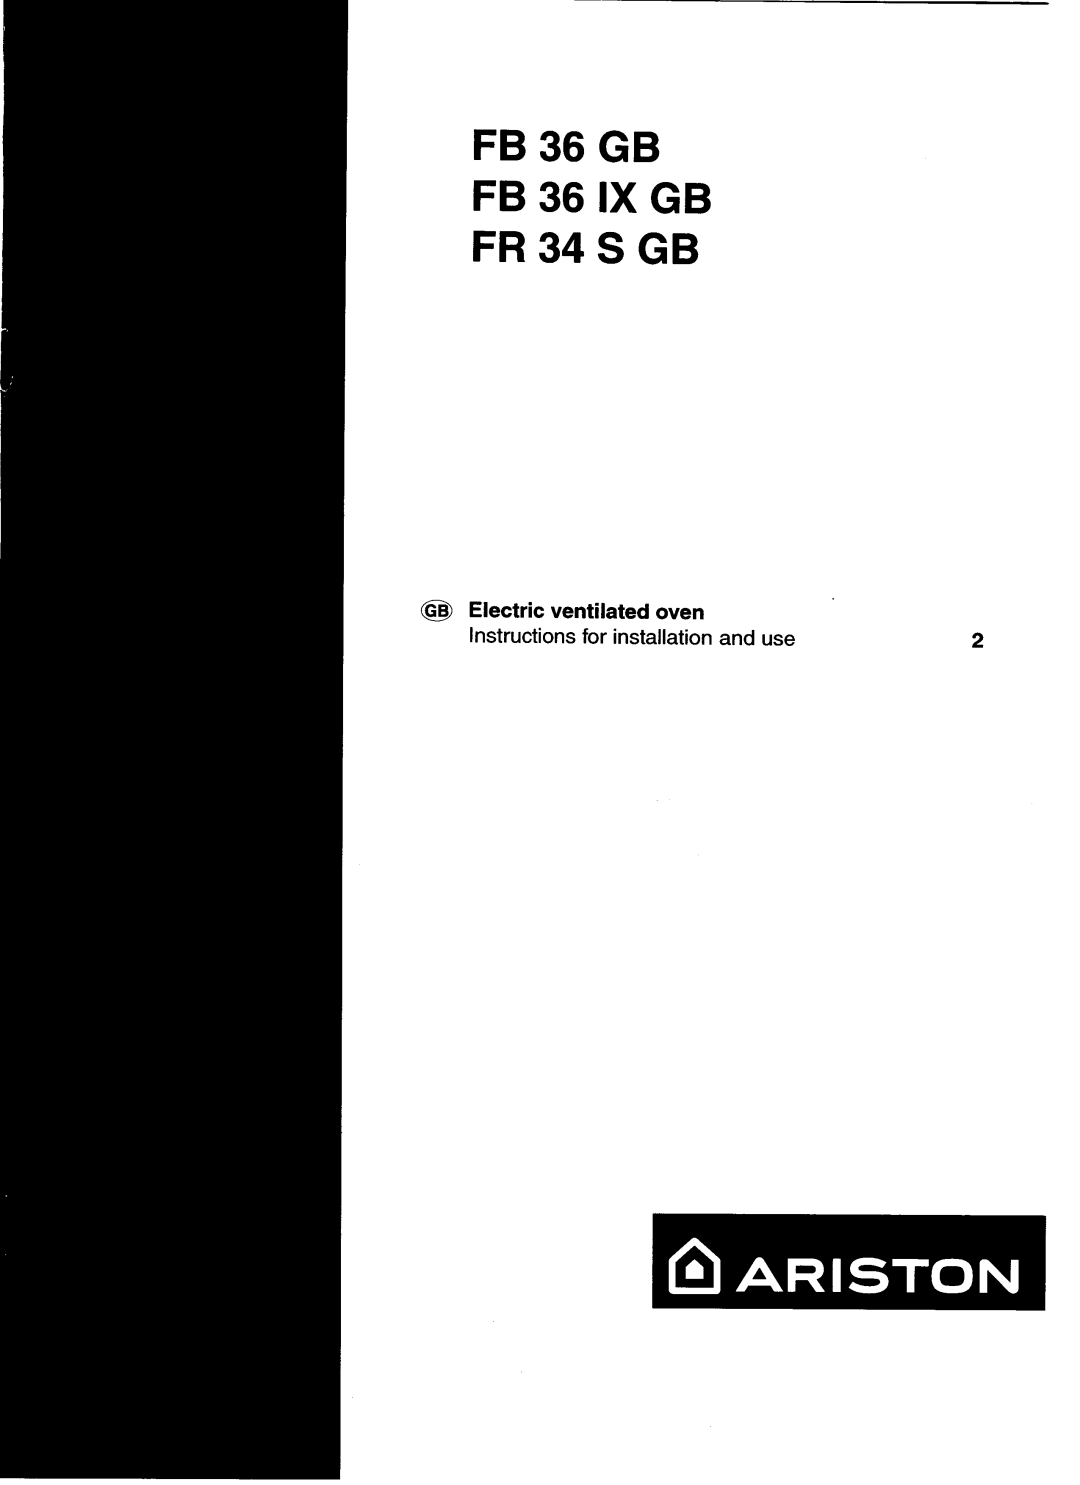 Ariston FR 34 S GB manual 